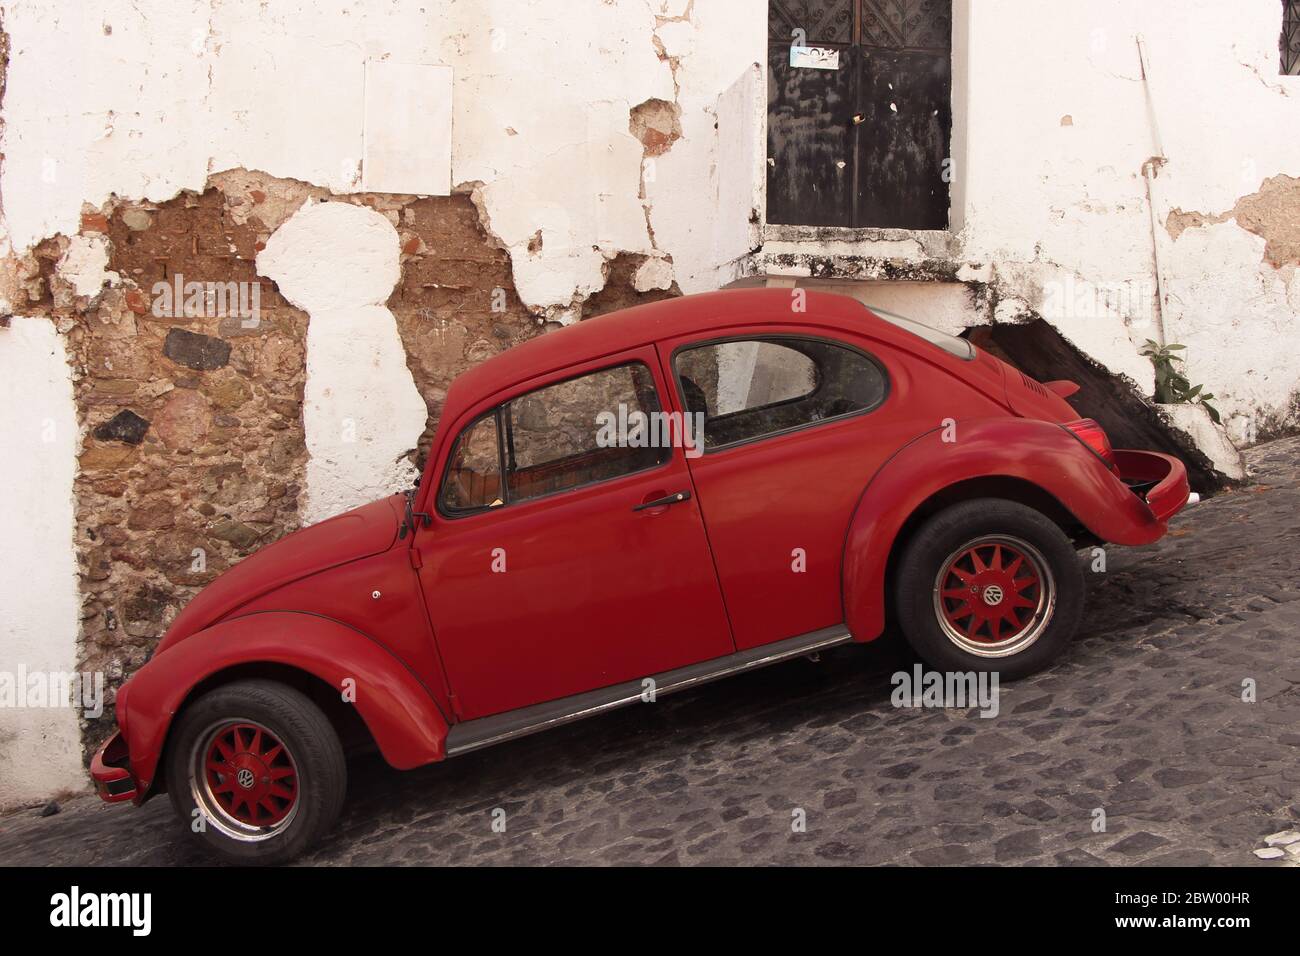 Red Beetle car, Volkswagen, dans la rue abrupte de Taxco, Guerrero, Mexique Banque D'Images